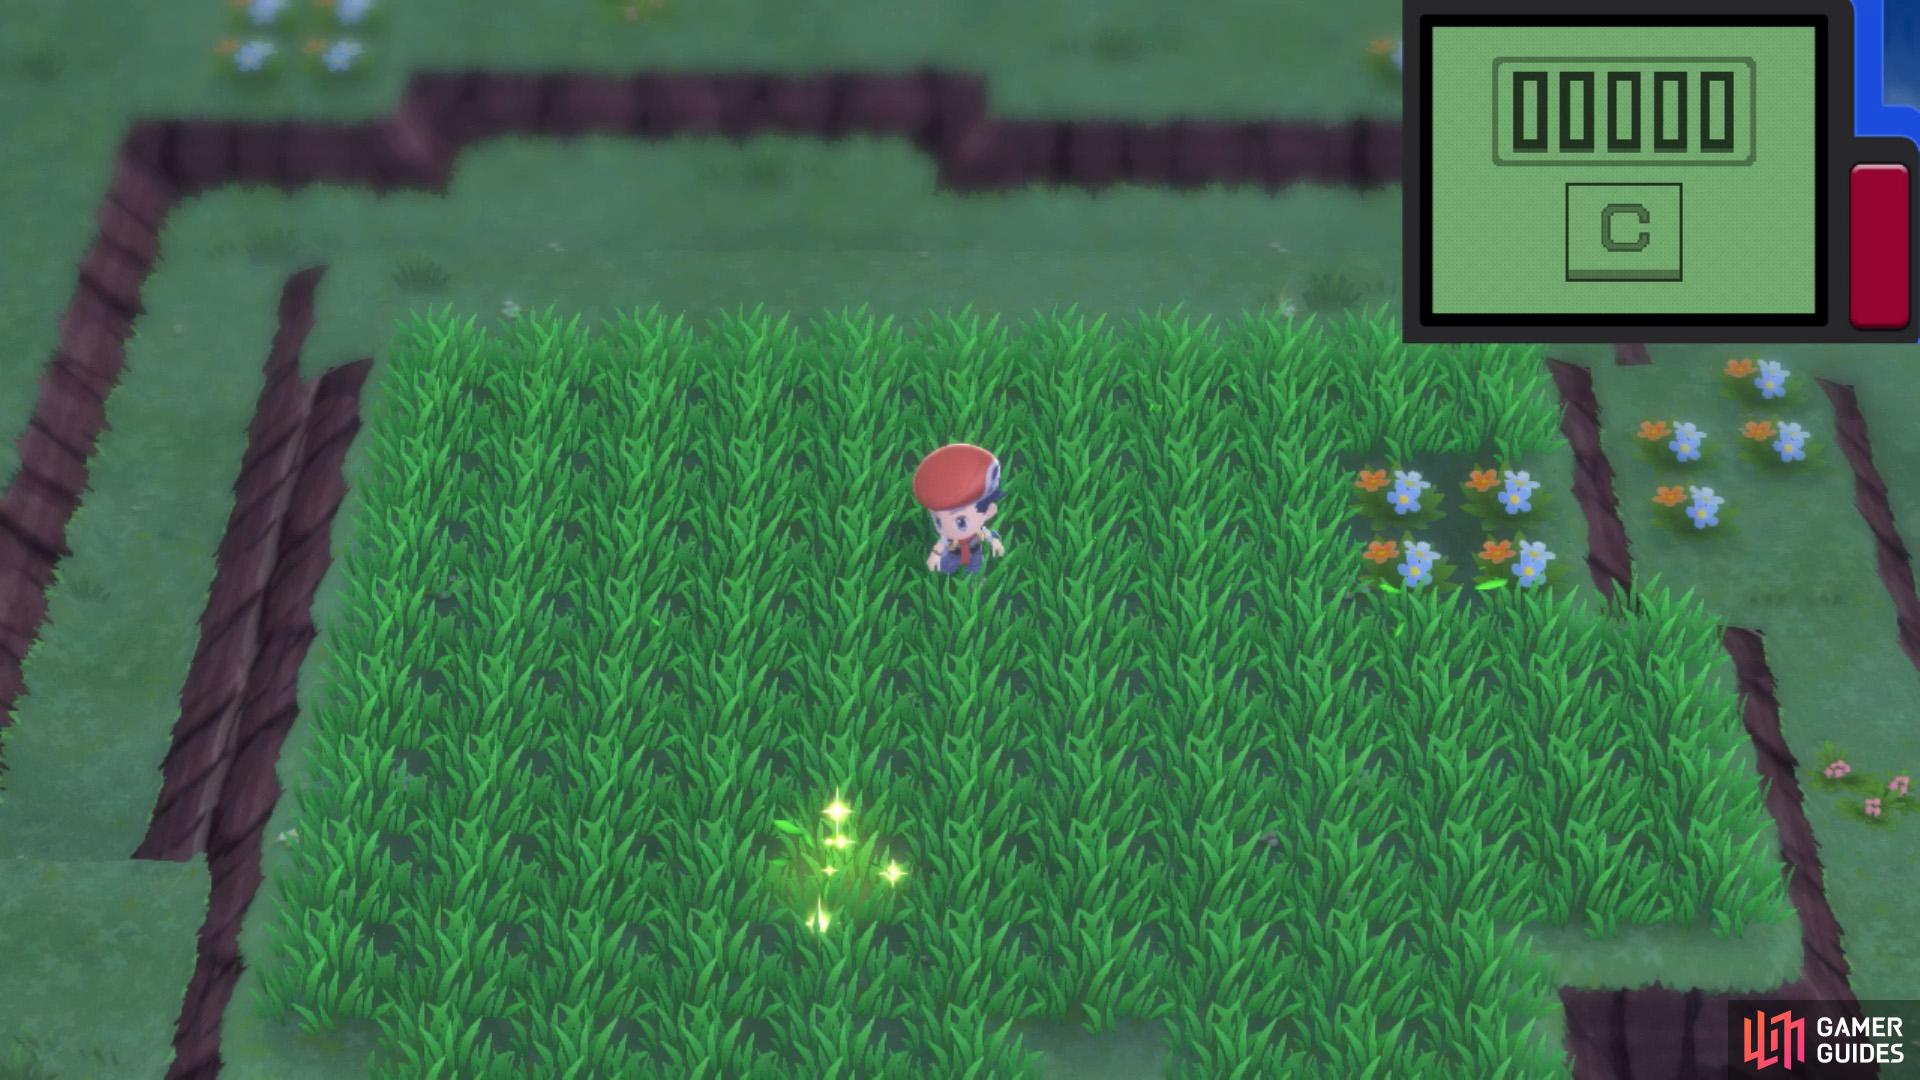 How to catch Shiny Pokemon in Pokemon Brilliant Diamond & Shining